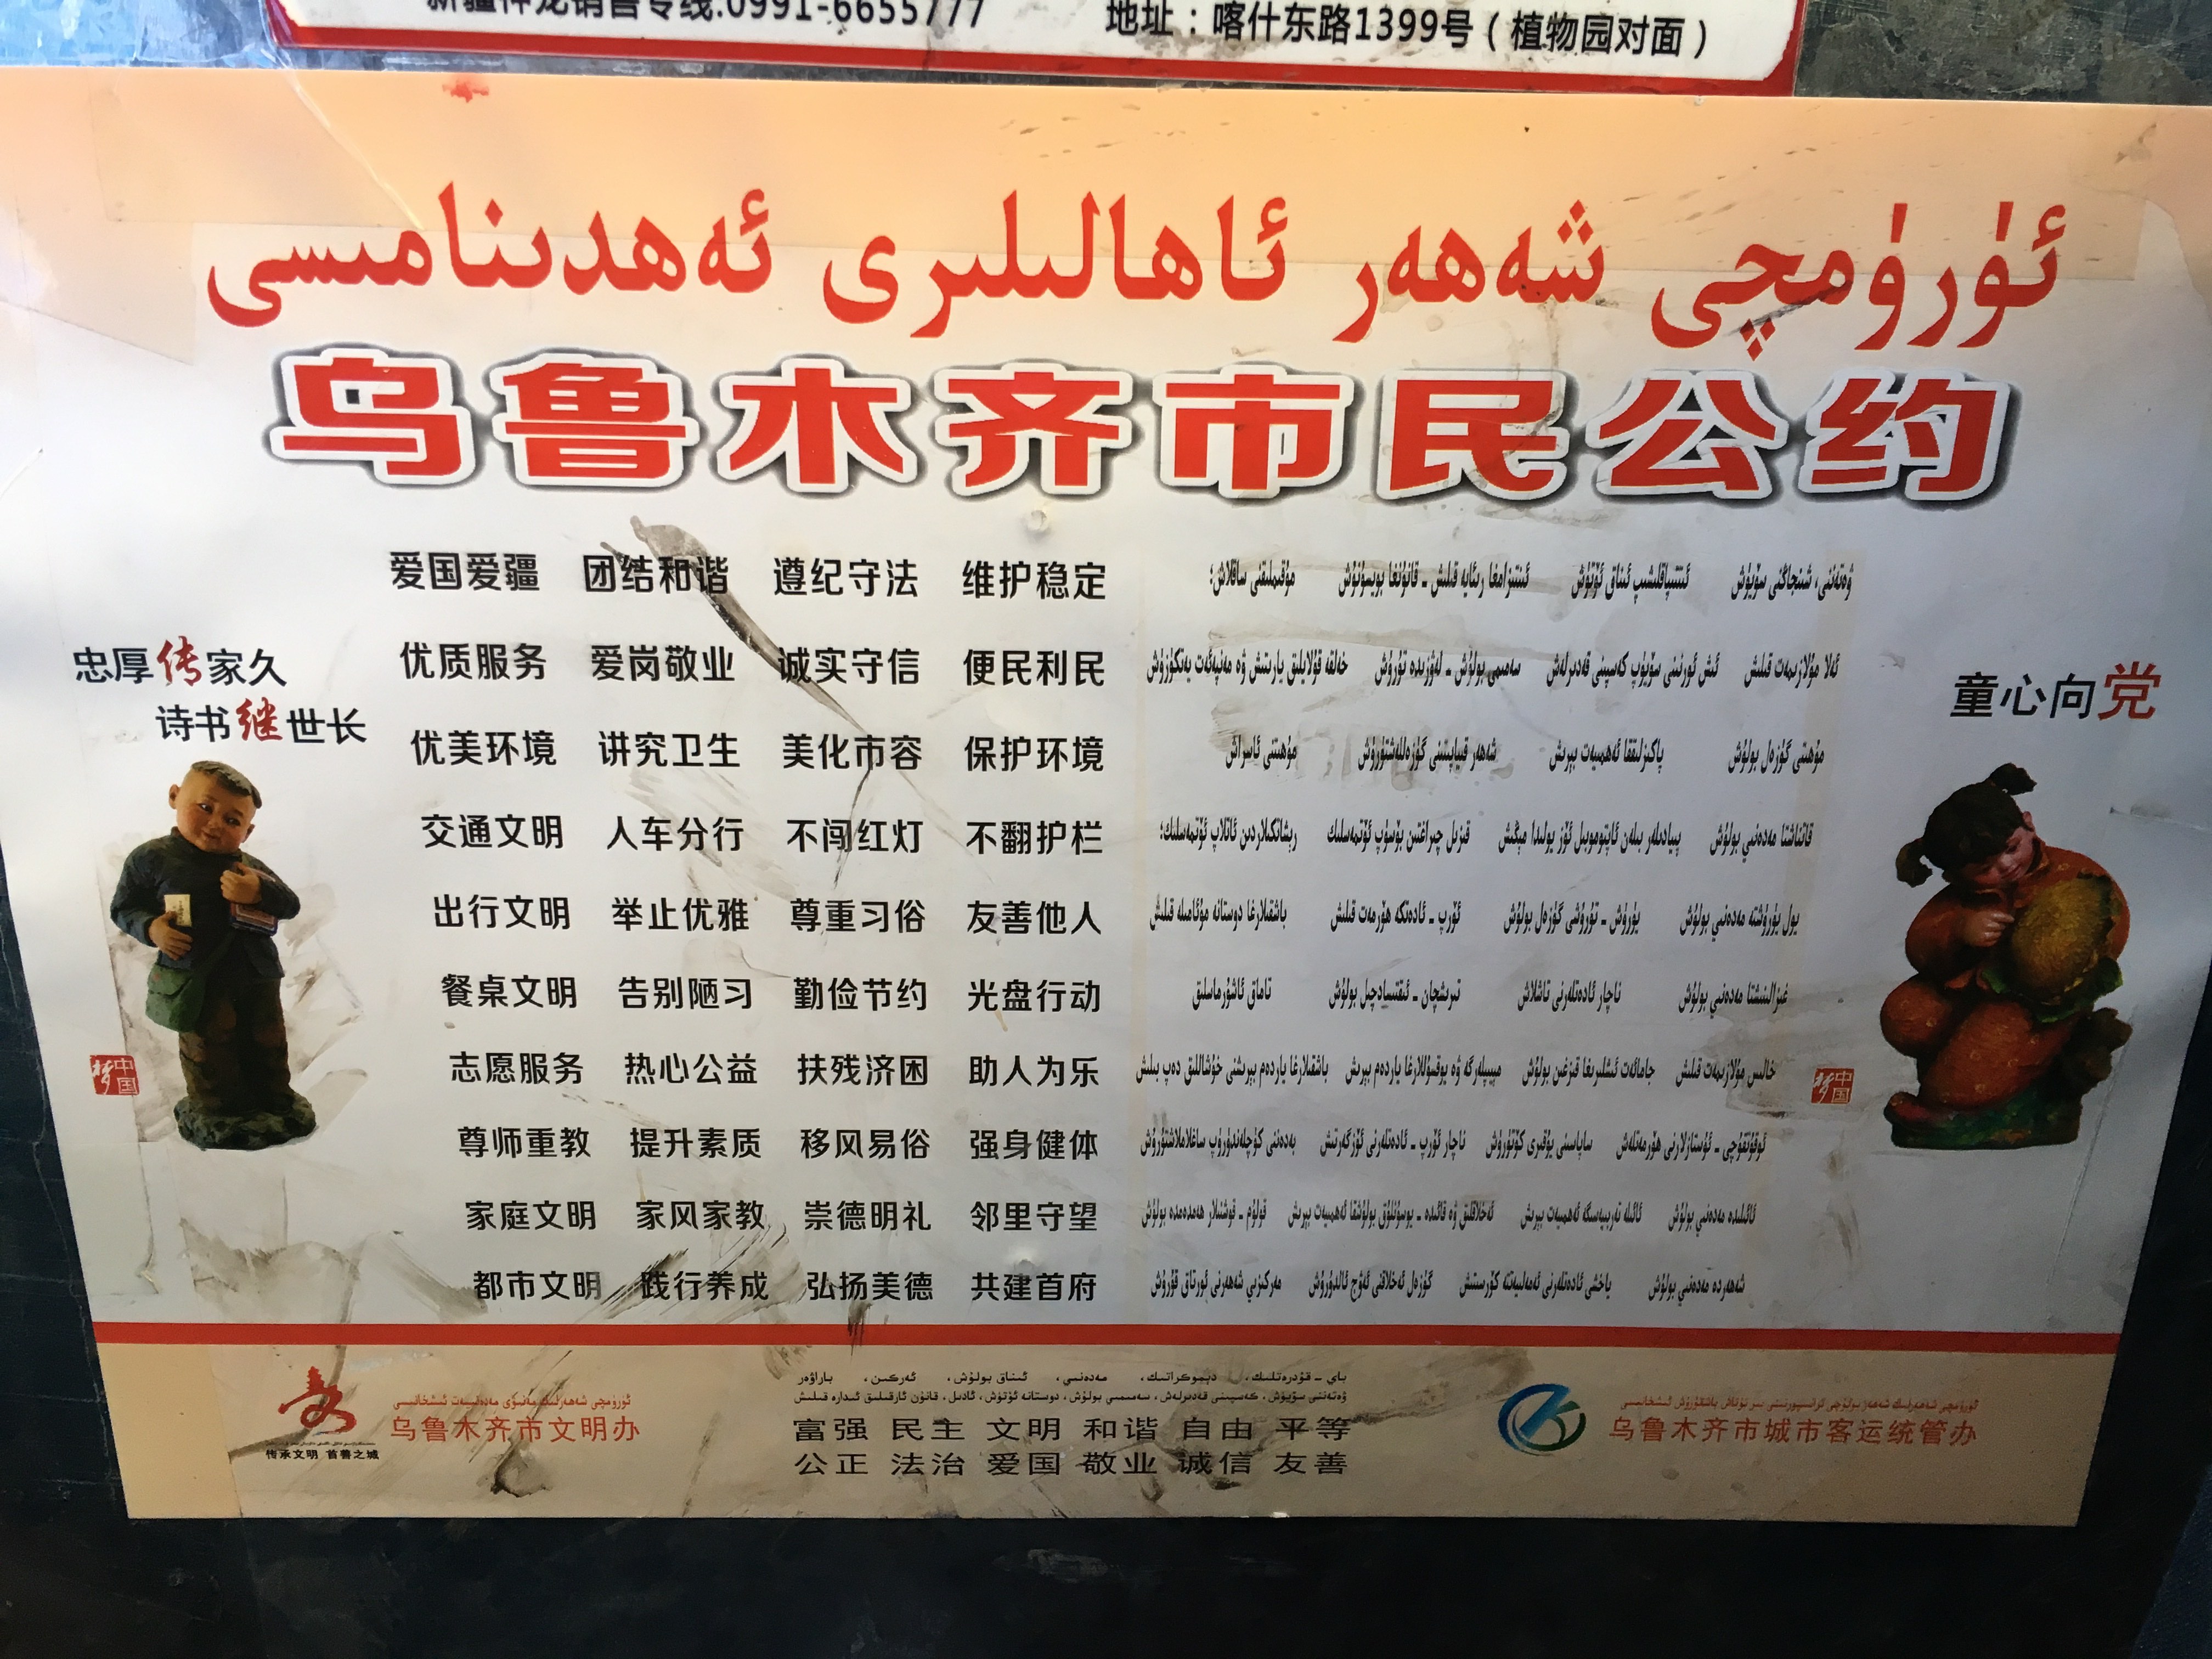 Translation: Propaganda in Urumqi Amid Crackdown